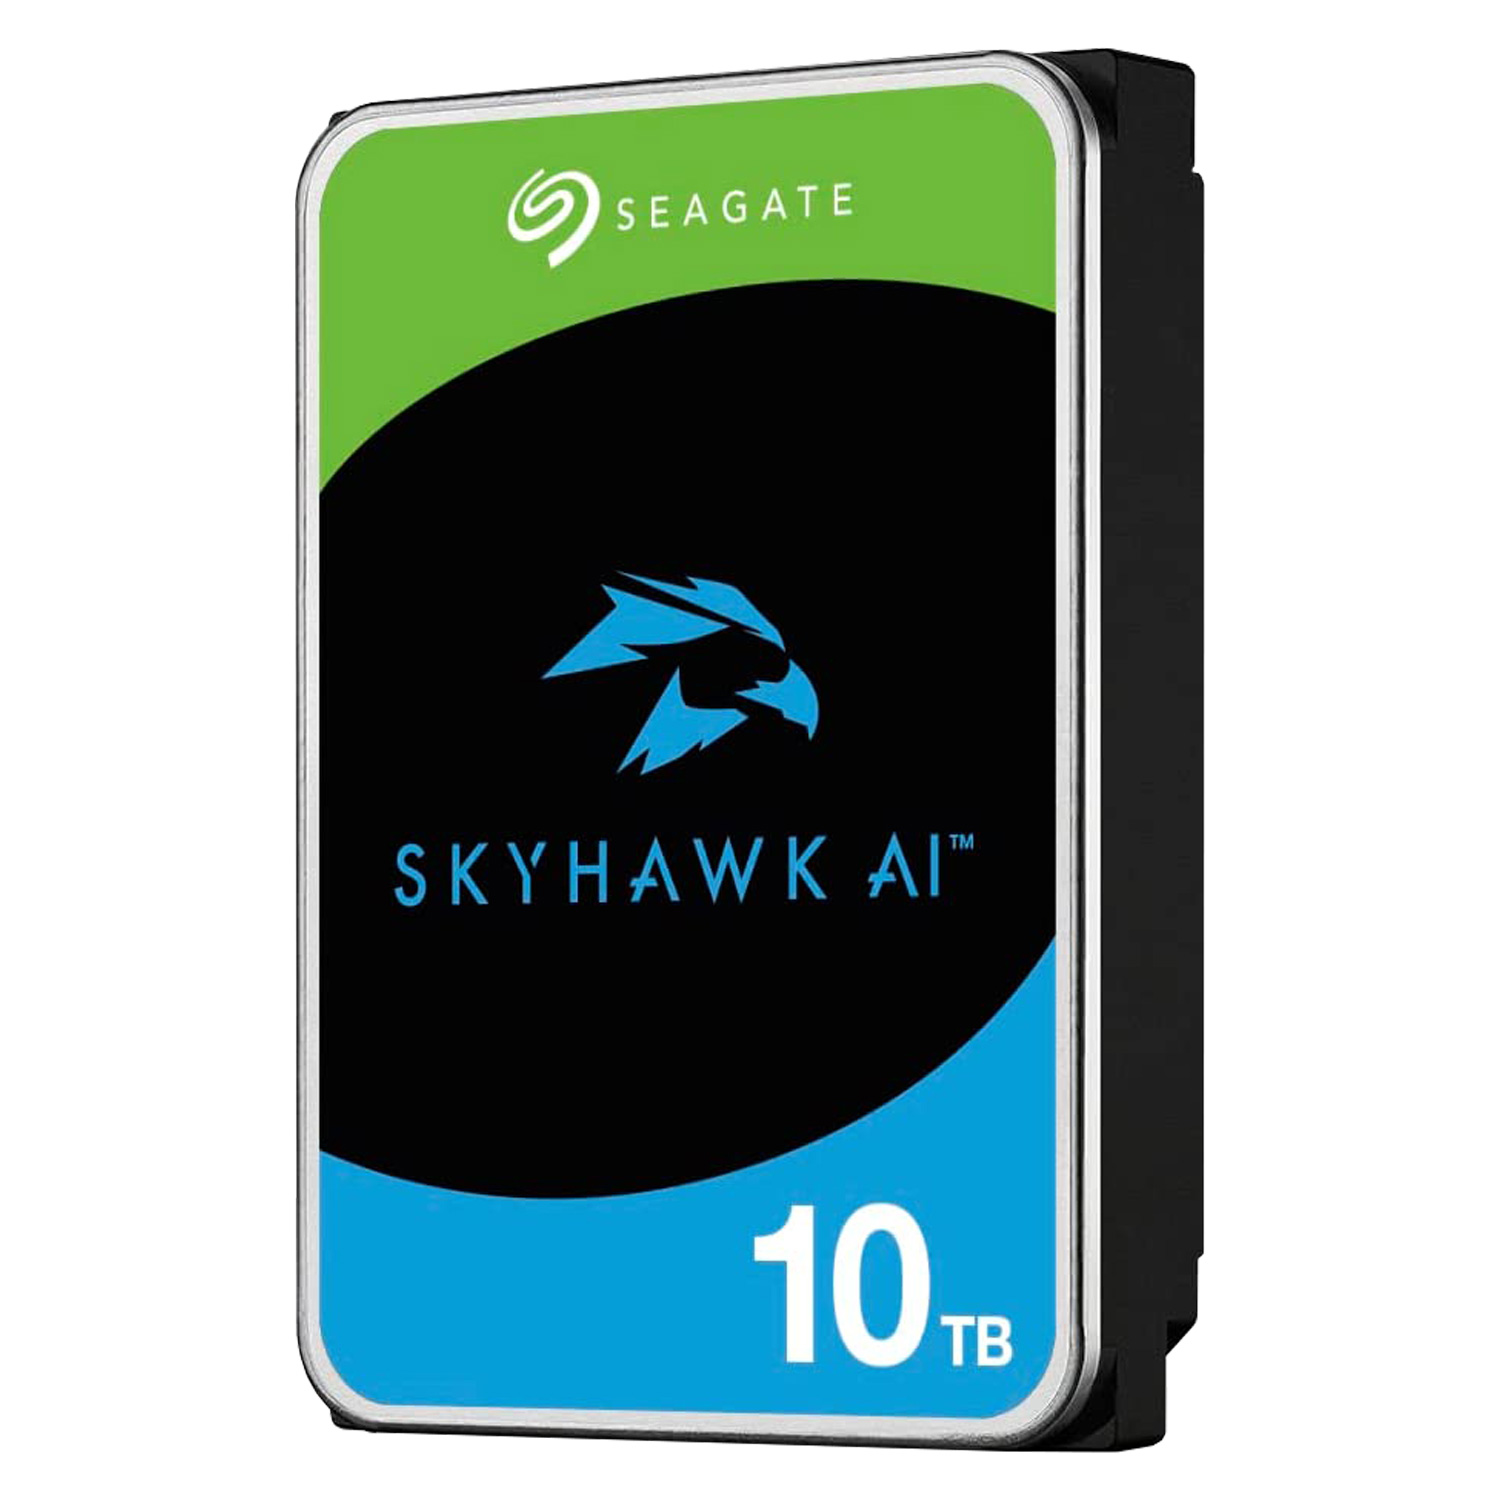 HD Seagate Skyhawk AI Surveillance 10TB / SATA 3 / 256MB / 7200RPM - (ST10000VE001)
